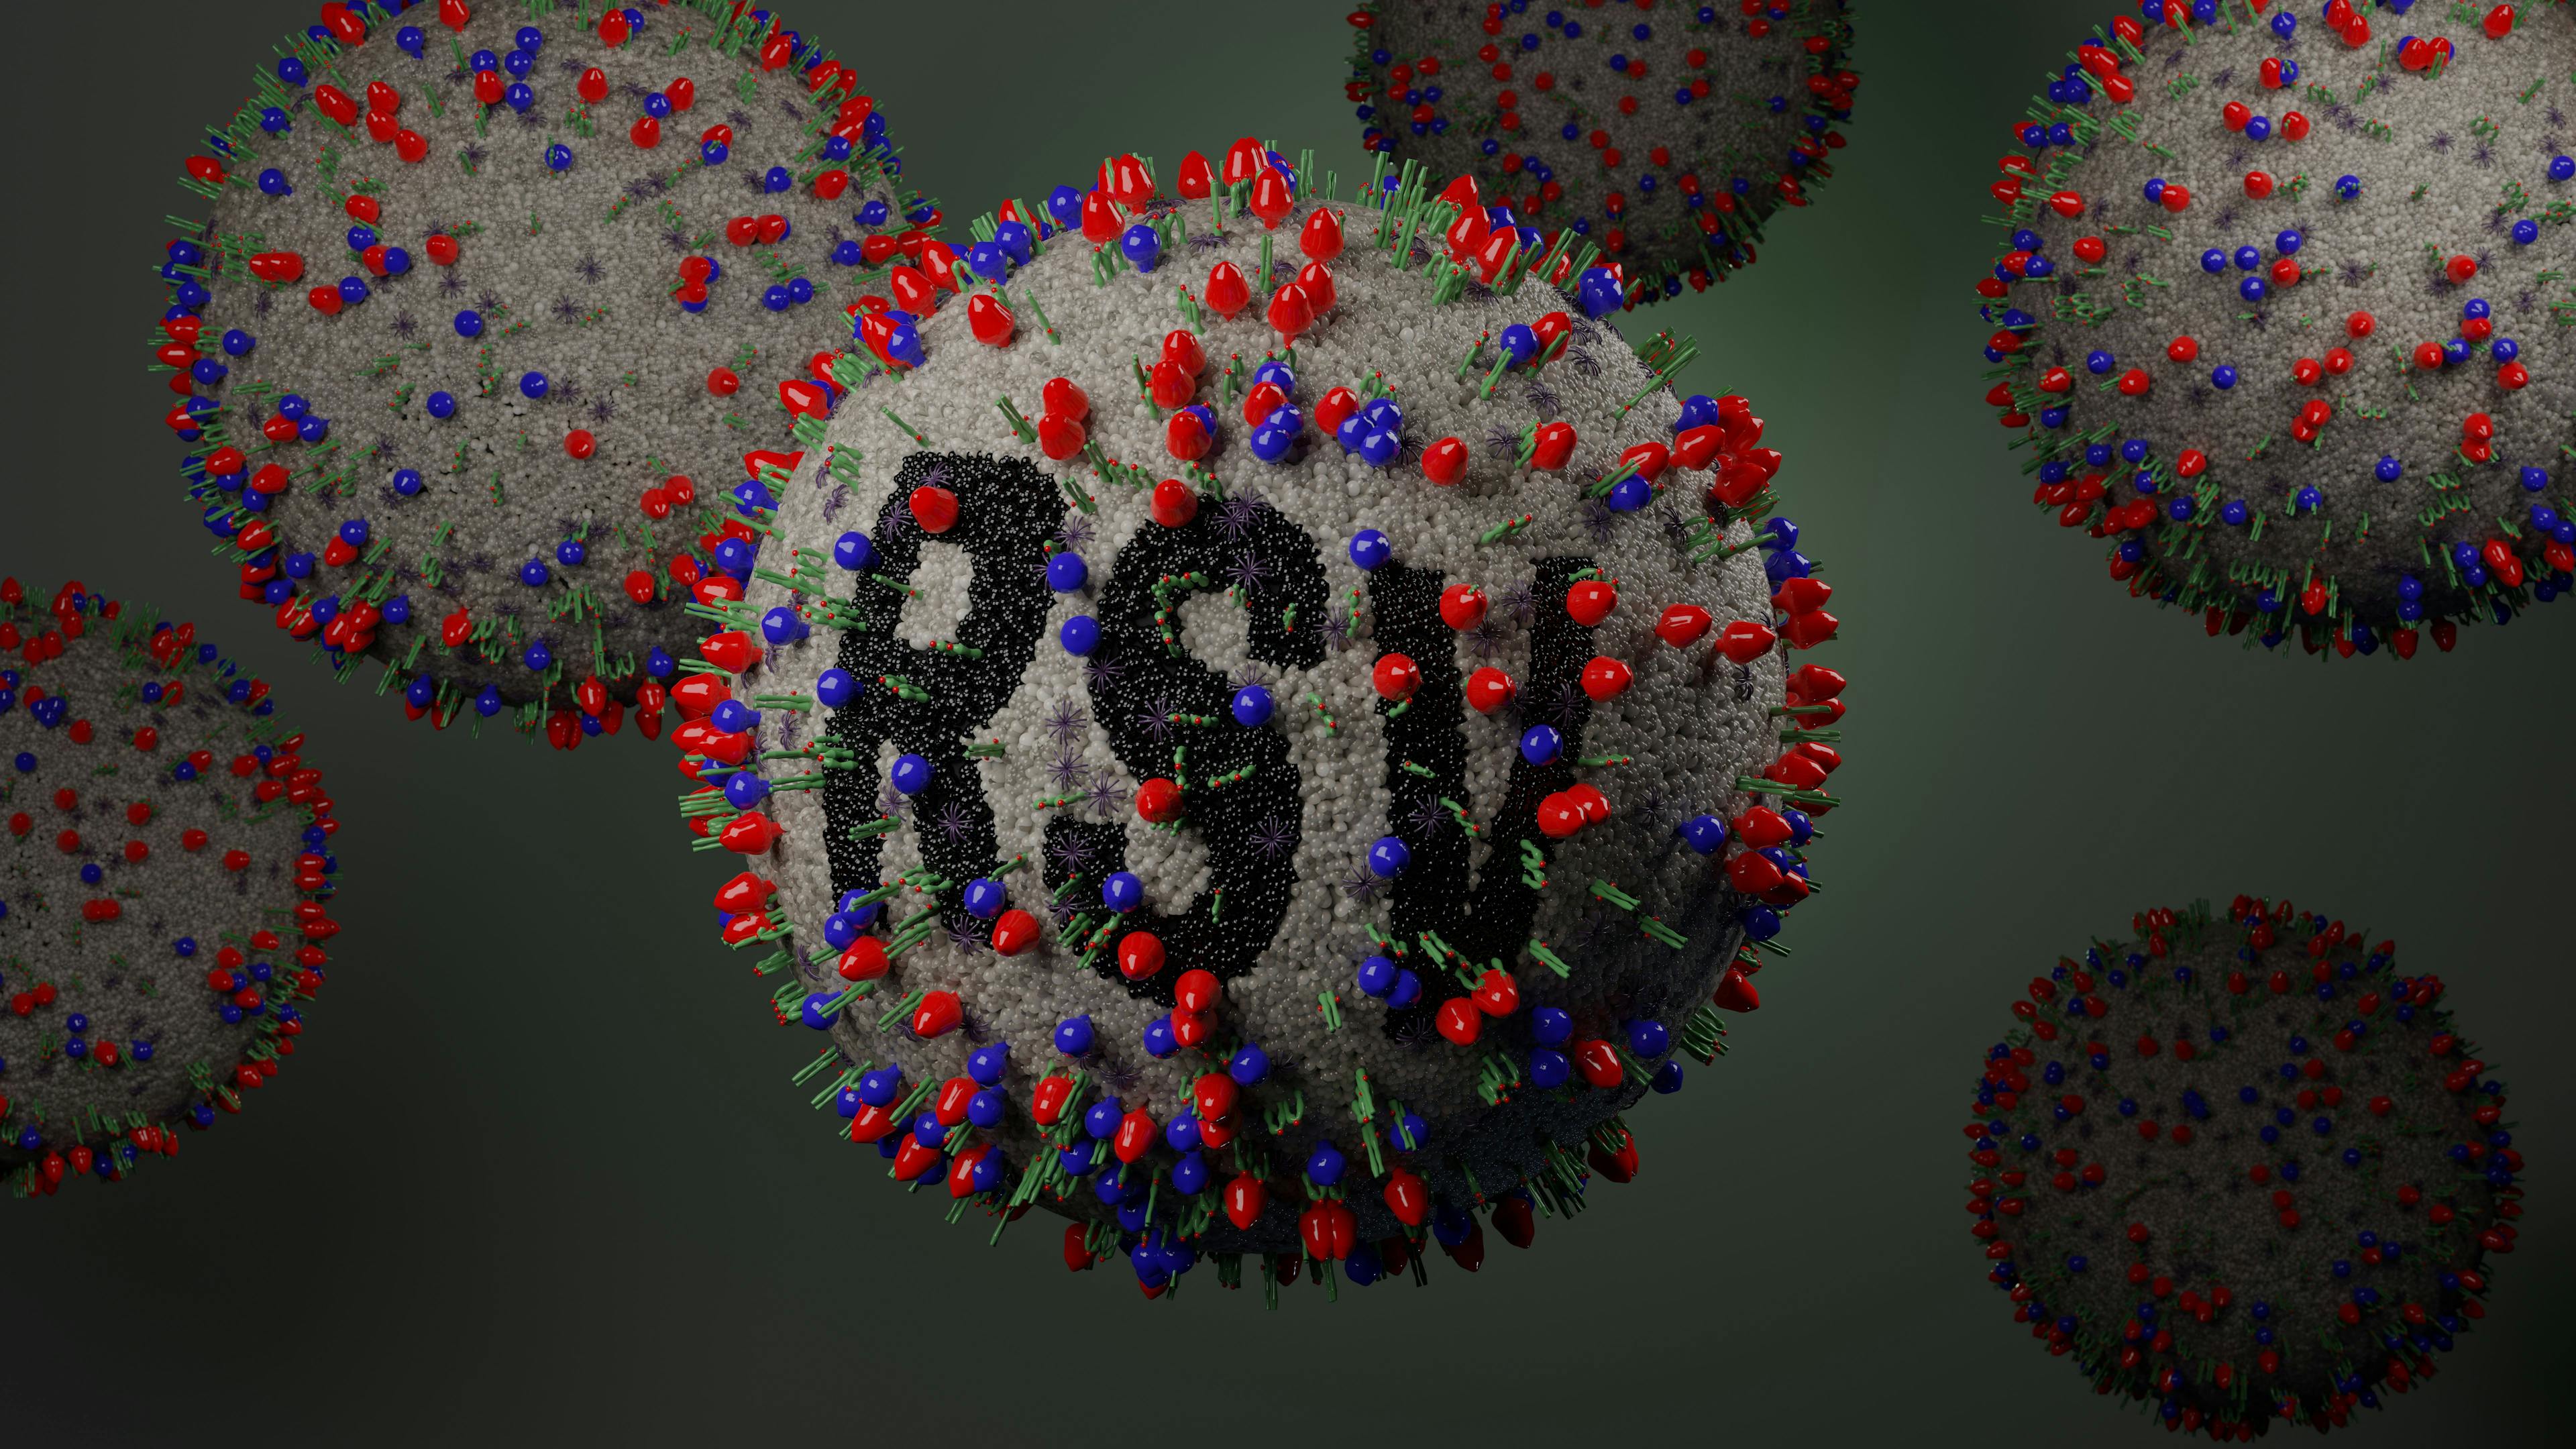 Illustration of Respiratory Syncytial Virus or RSV. Credit: Peter Hansen - stock.adobe.com